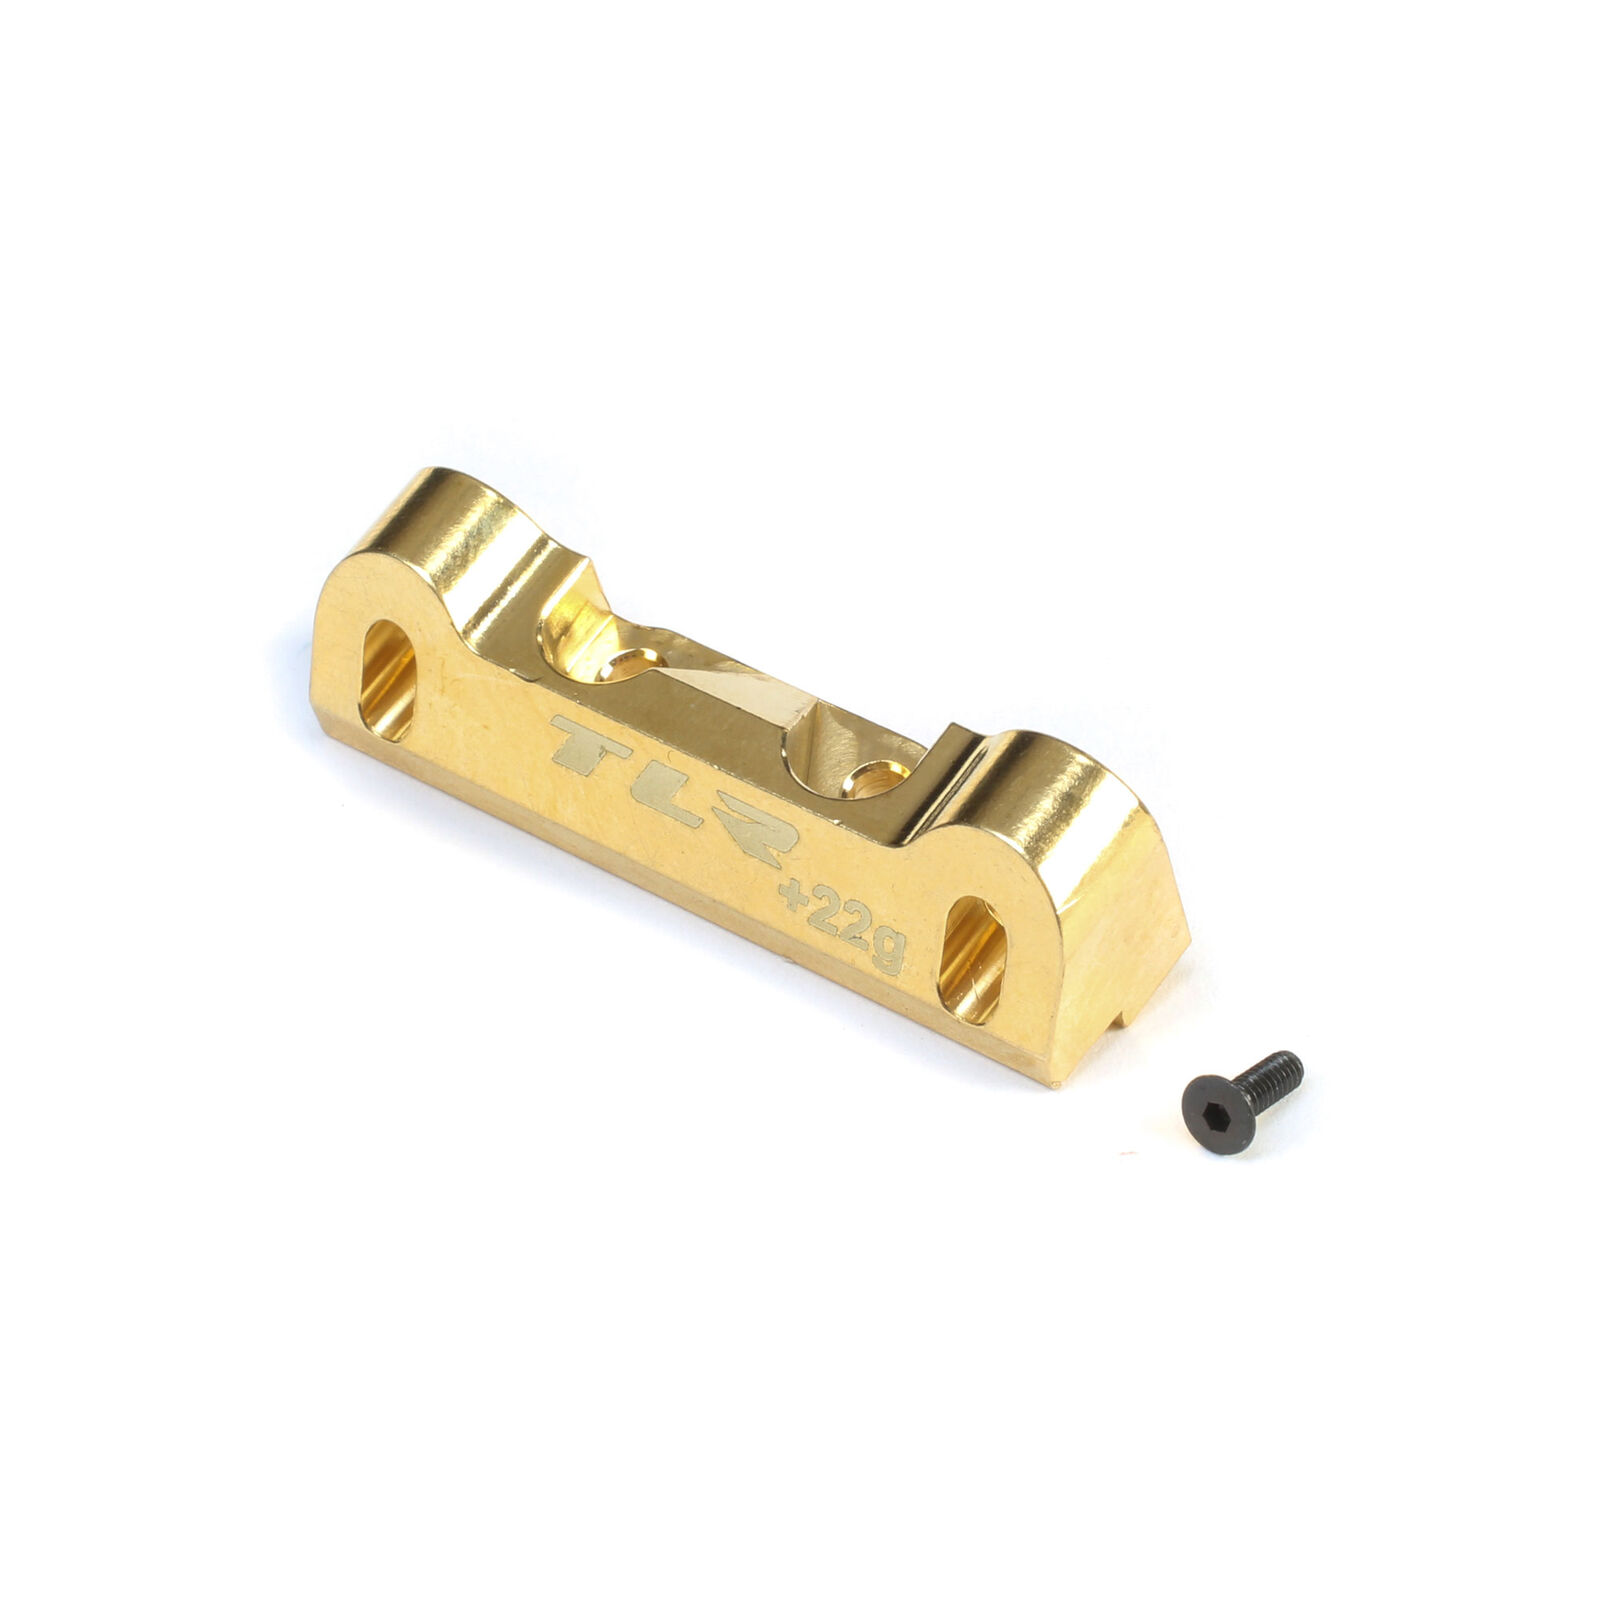 Brass Hinge Pin Brace, LRC +22g: 22 5.0